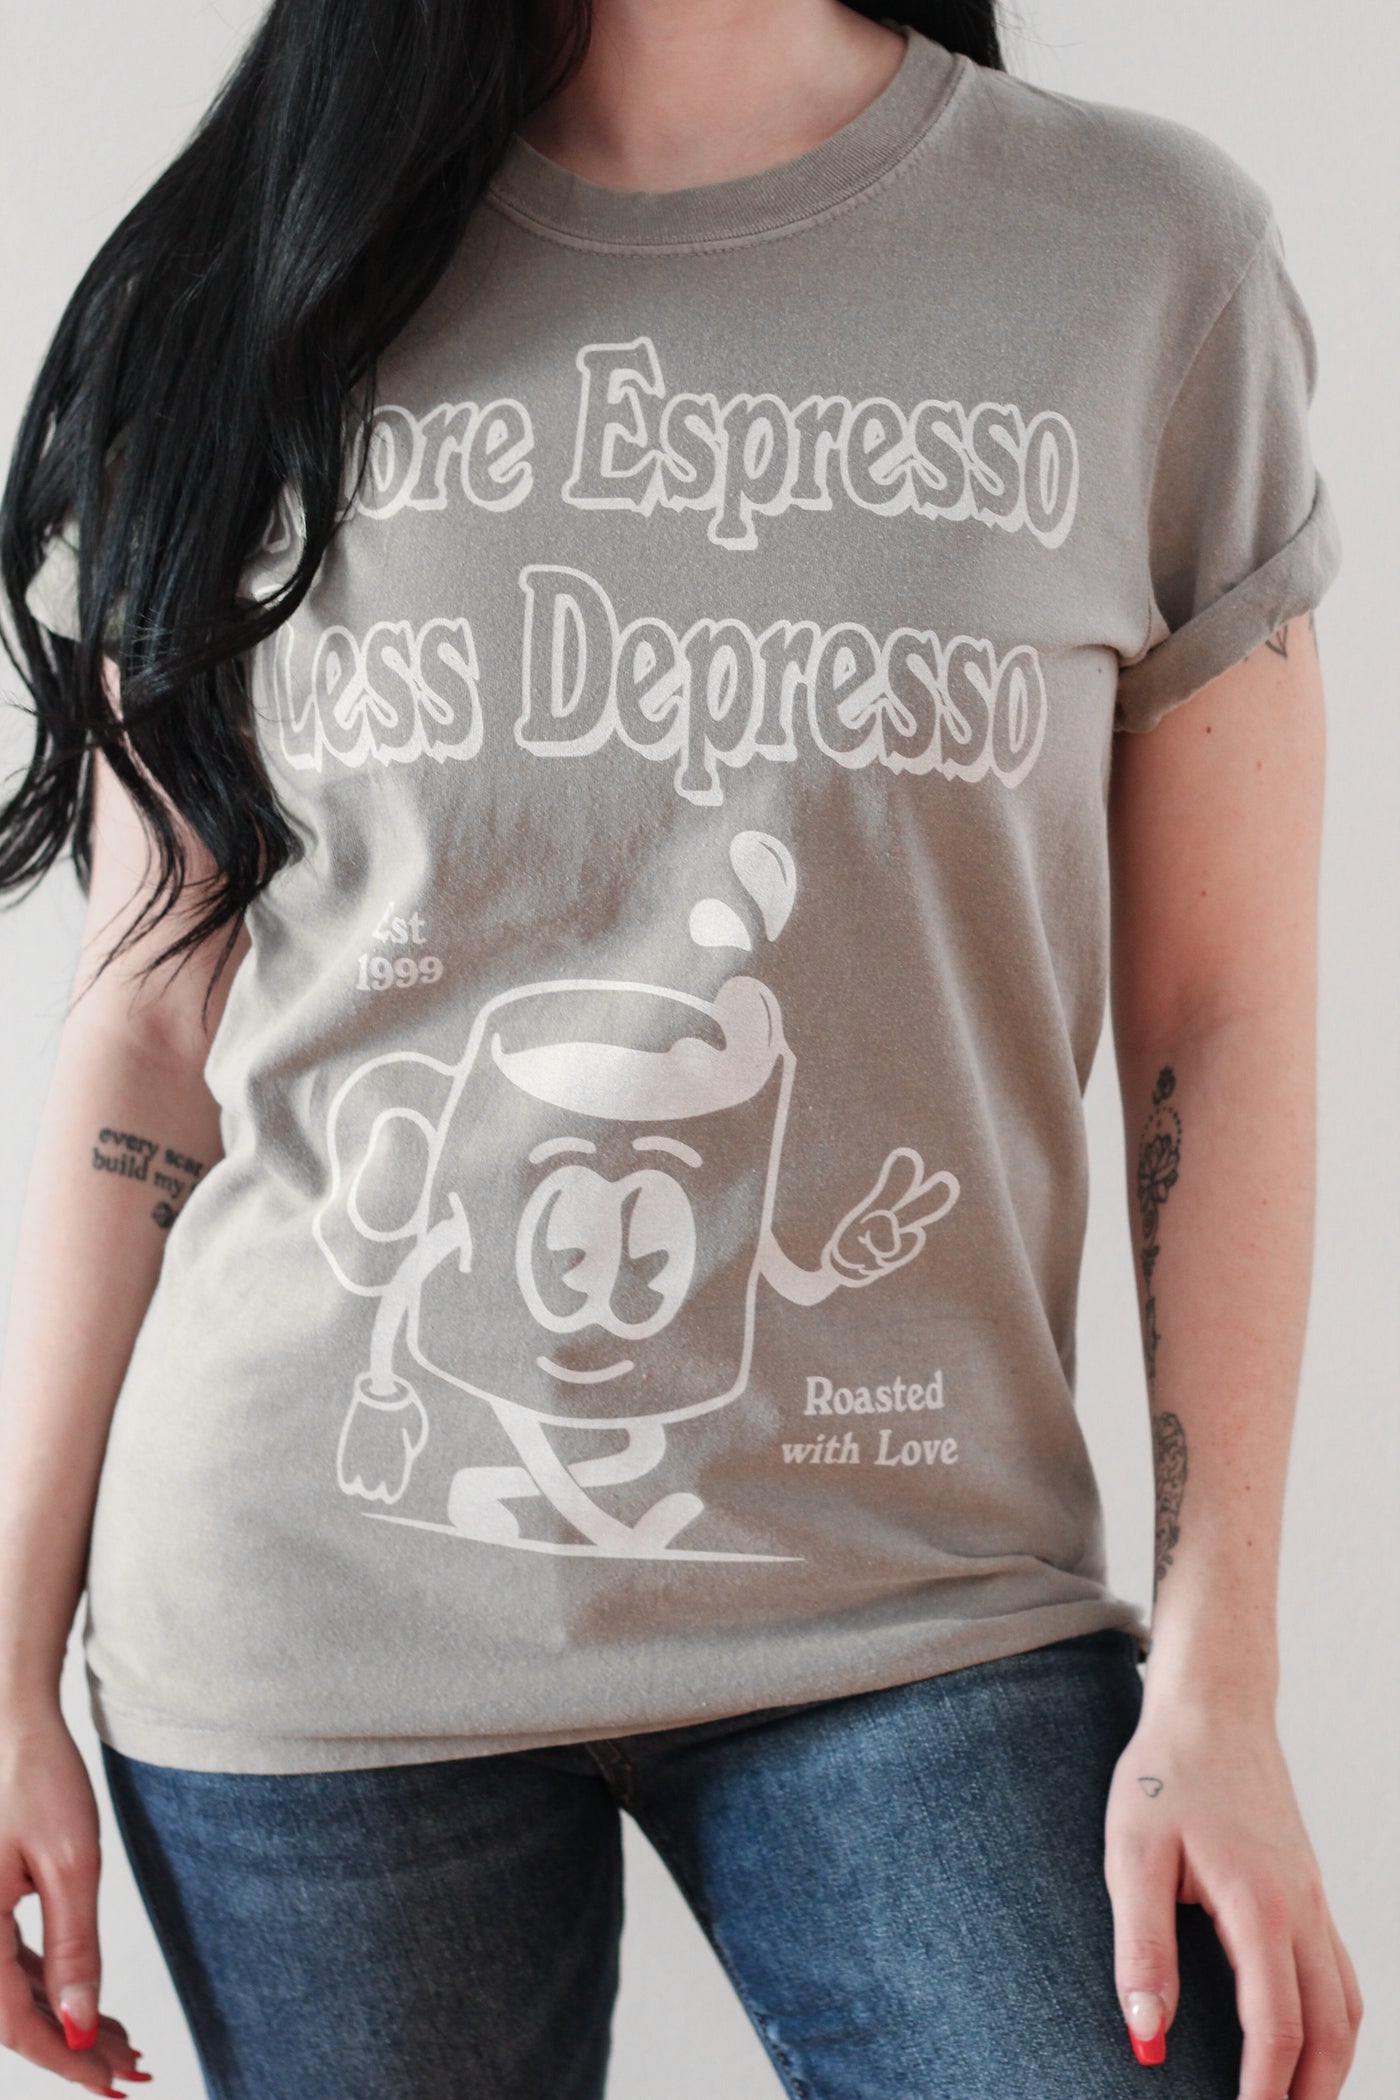 More Espresso Less Depresso Color Comfort Tee/Sweatshirt